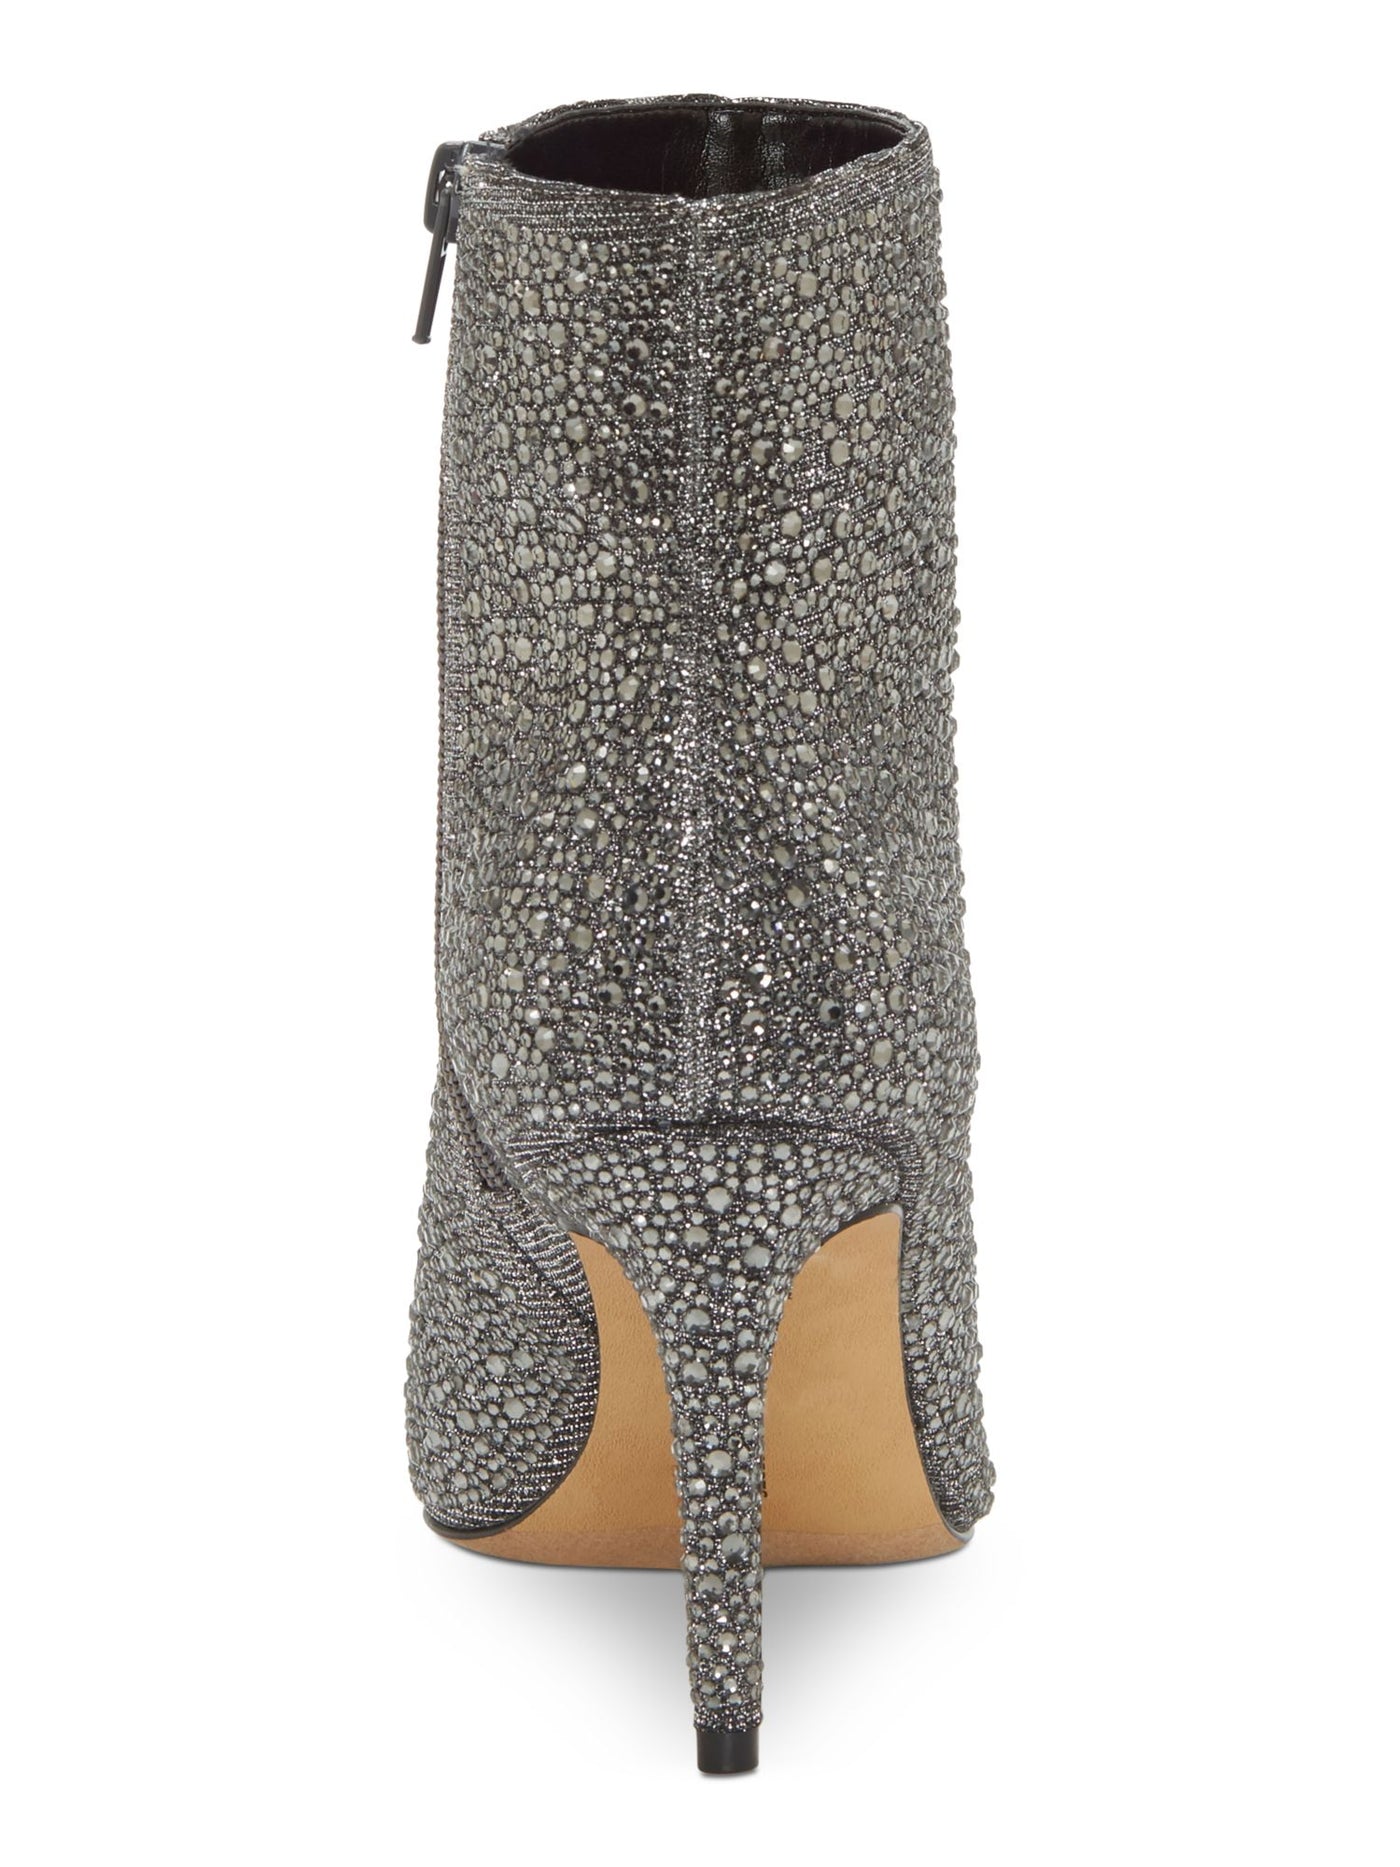 INC Womens Silver Comfort Metallic Detail Studded Glitter Ignacia Pointed Toe Stiletto Zip-Up Dress Booties 10 M